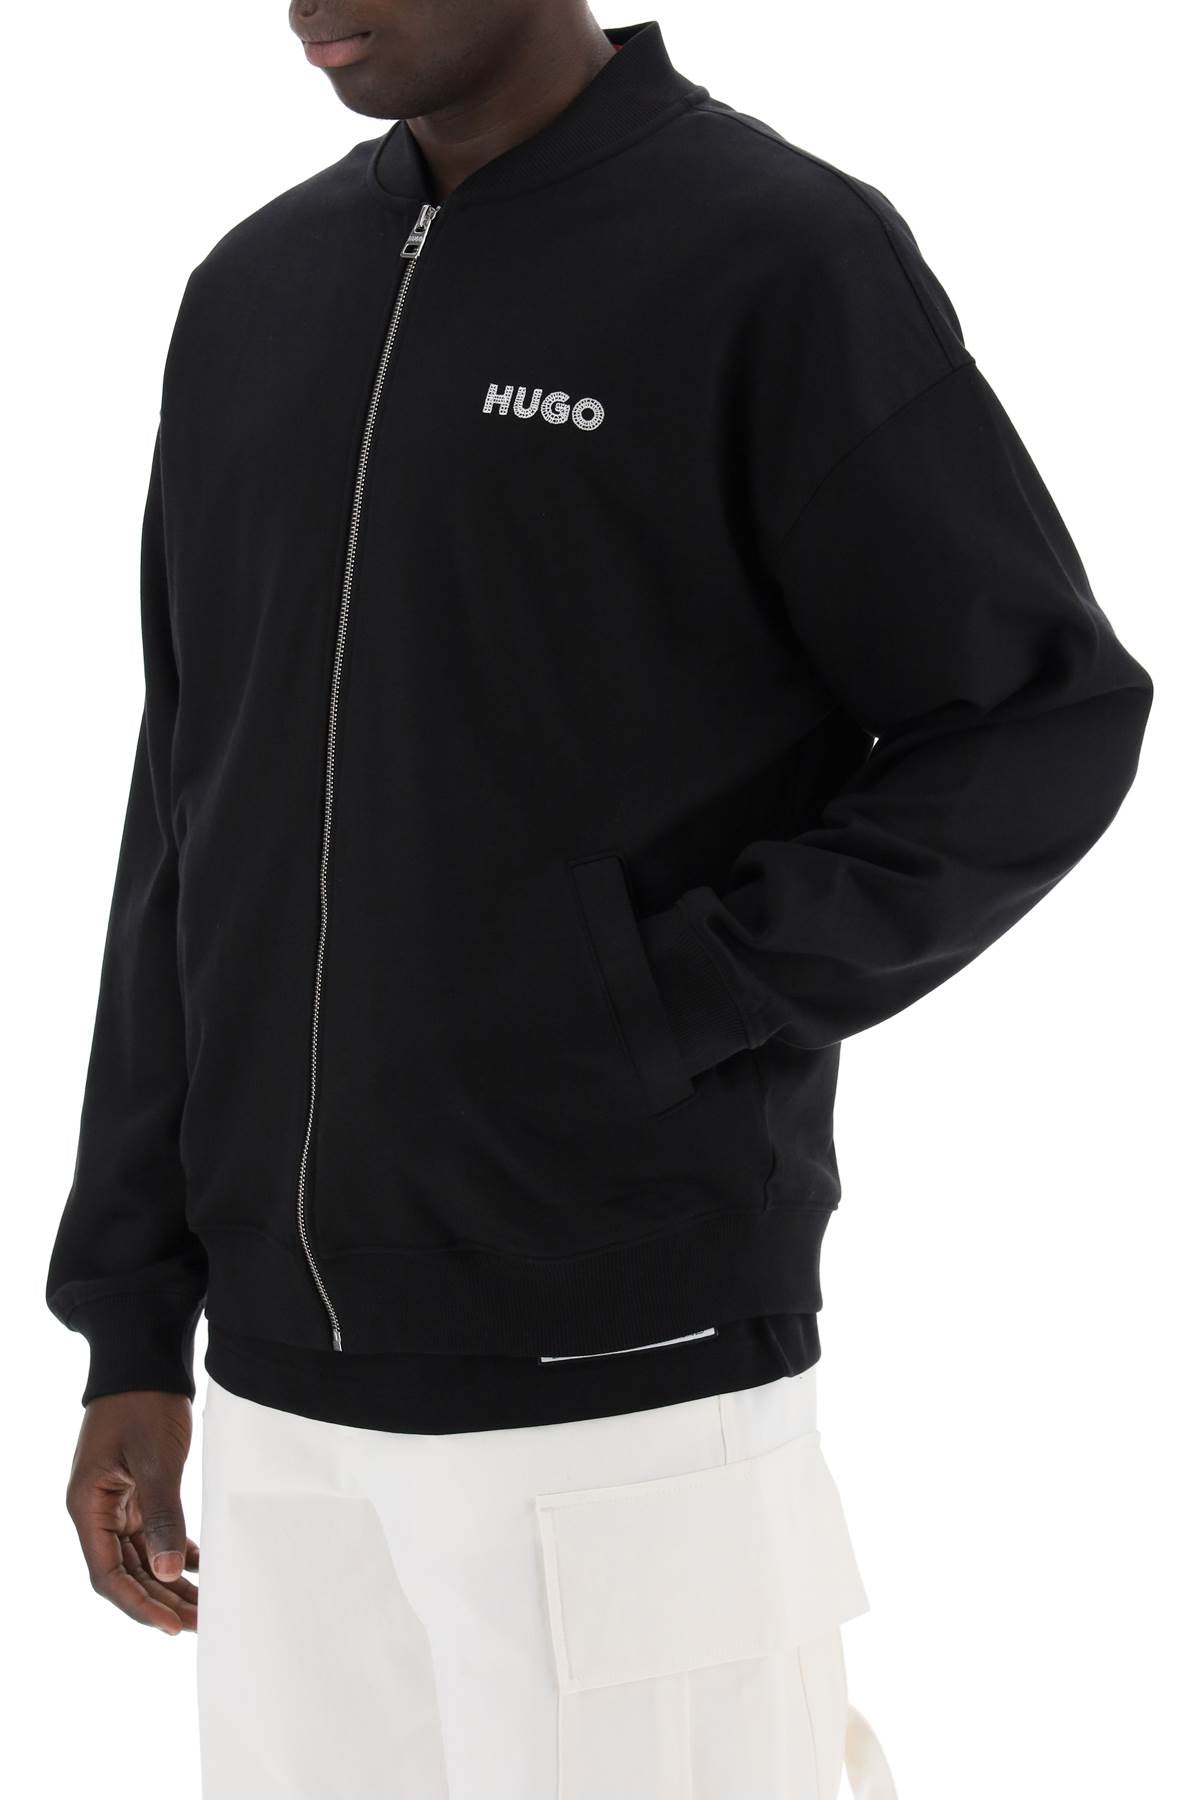 Hugo embroidered logo sweatshirt by-3